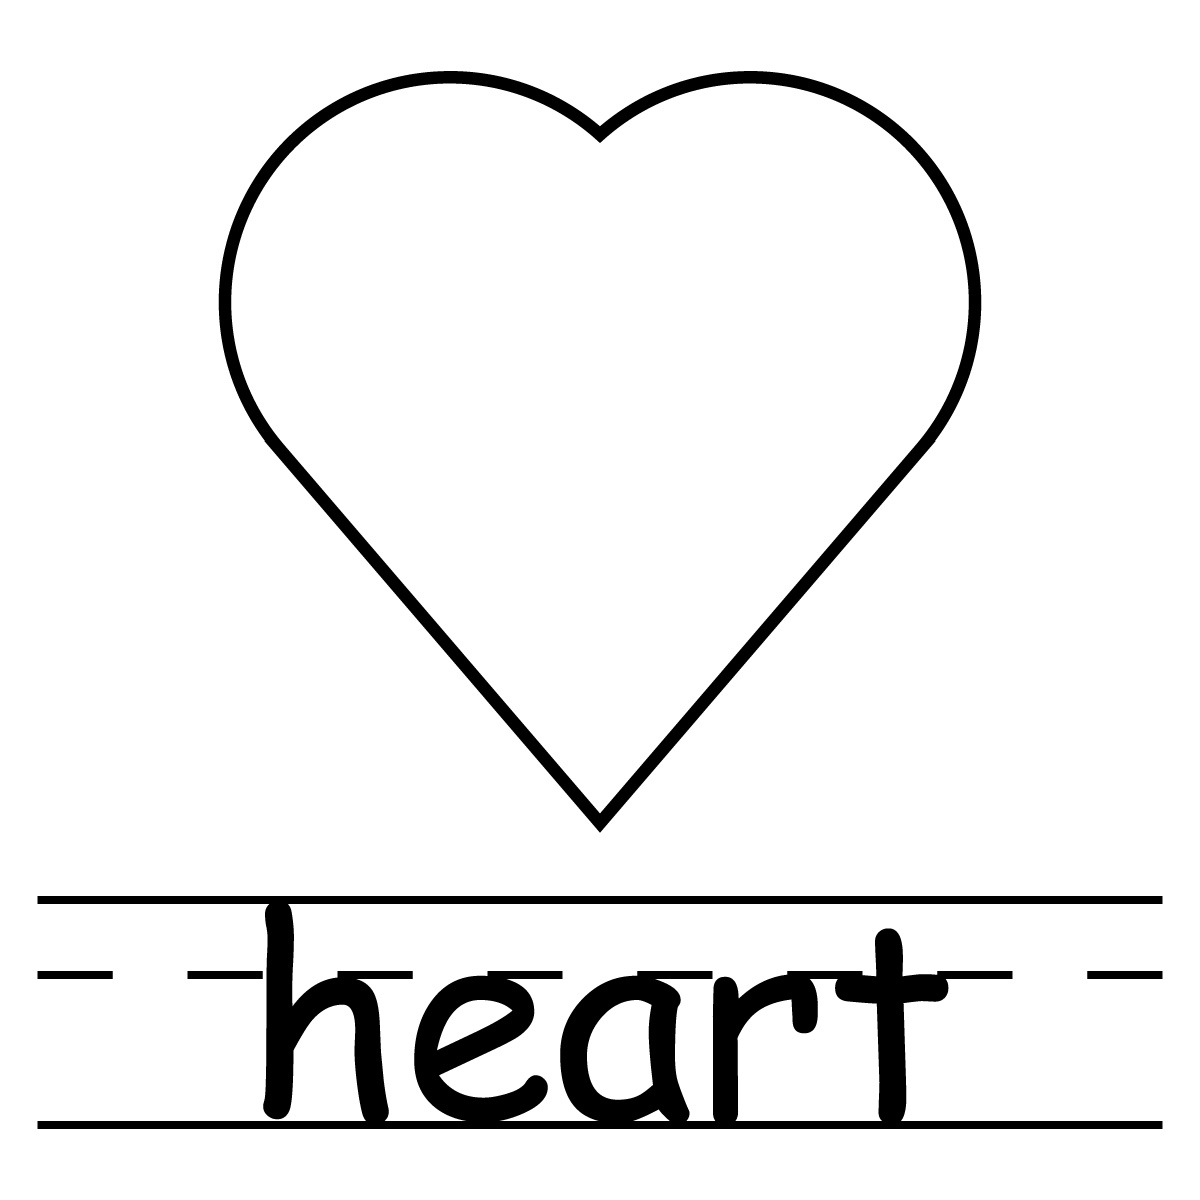 Free clipart heart shape